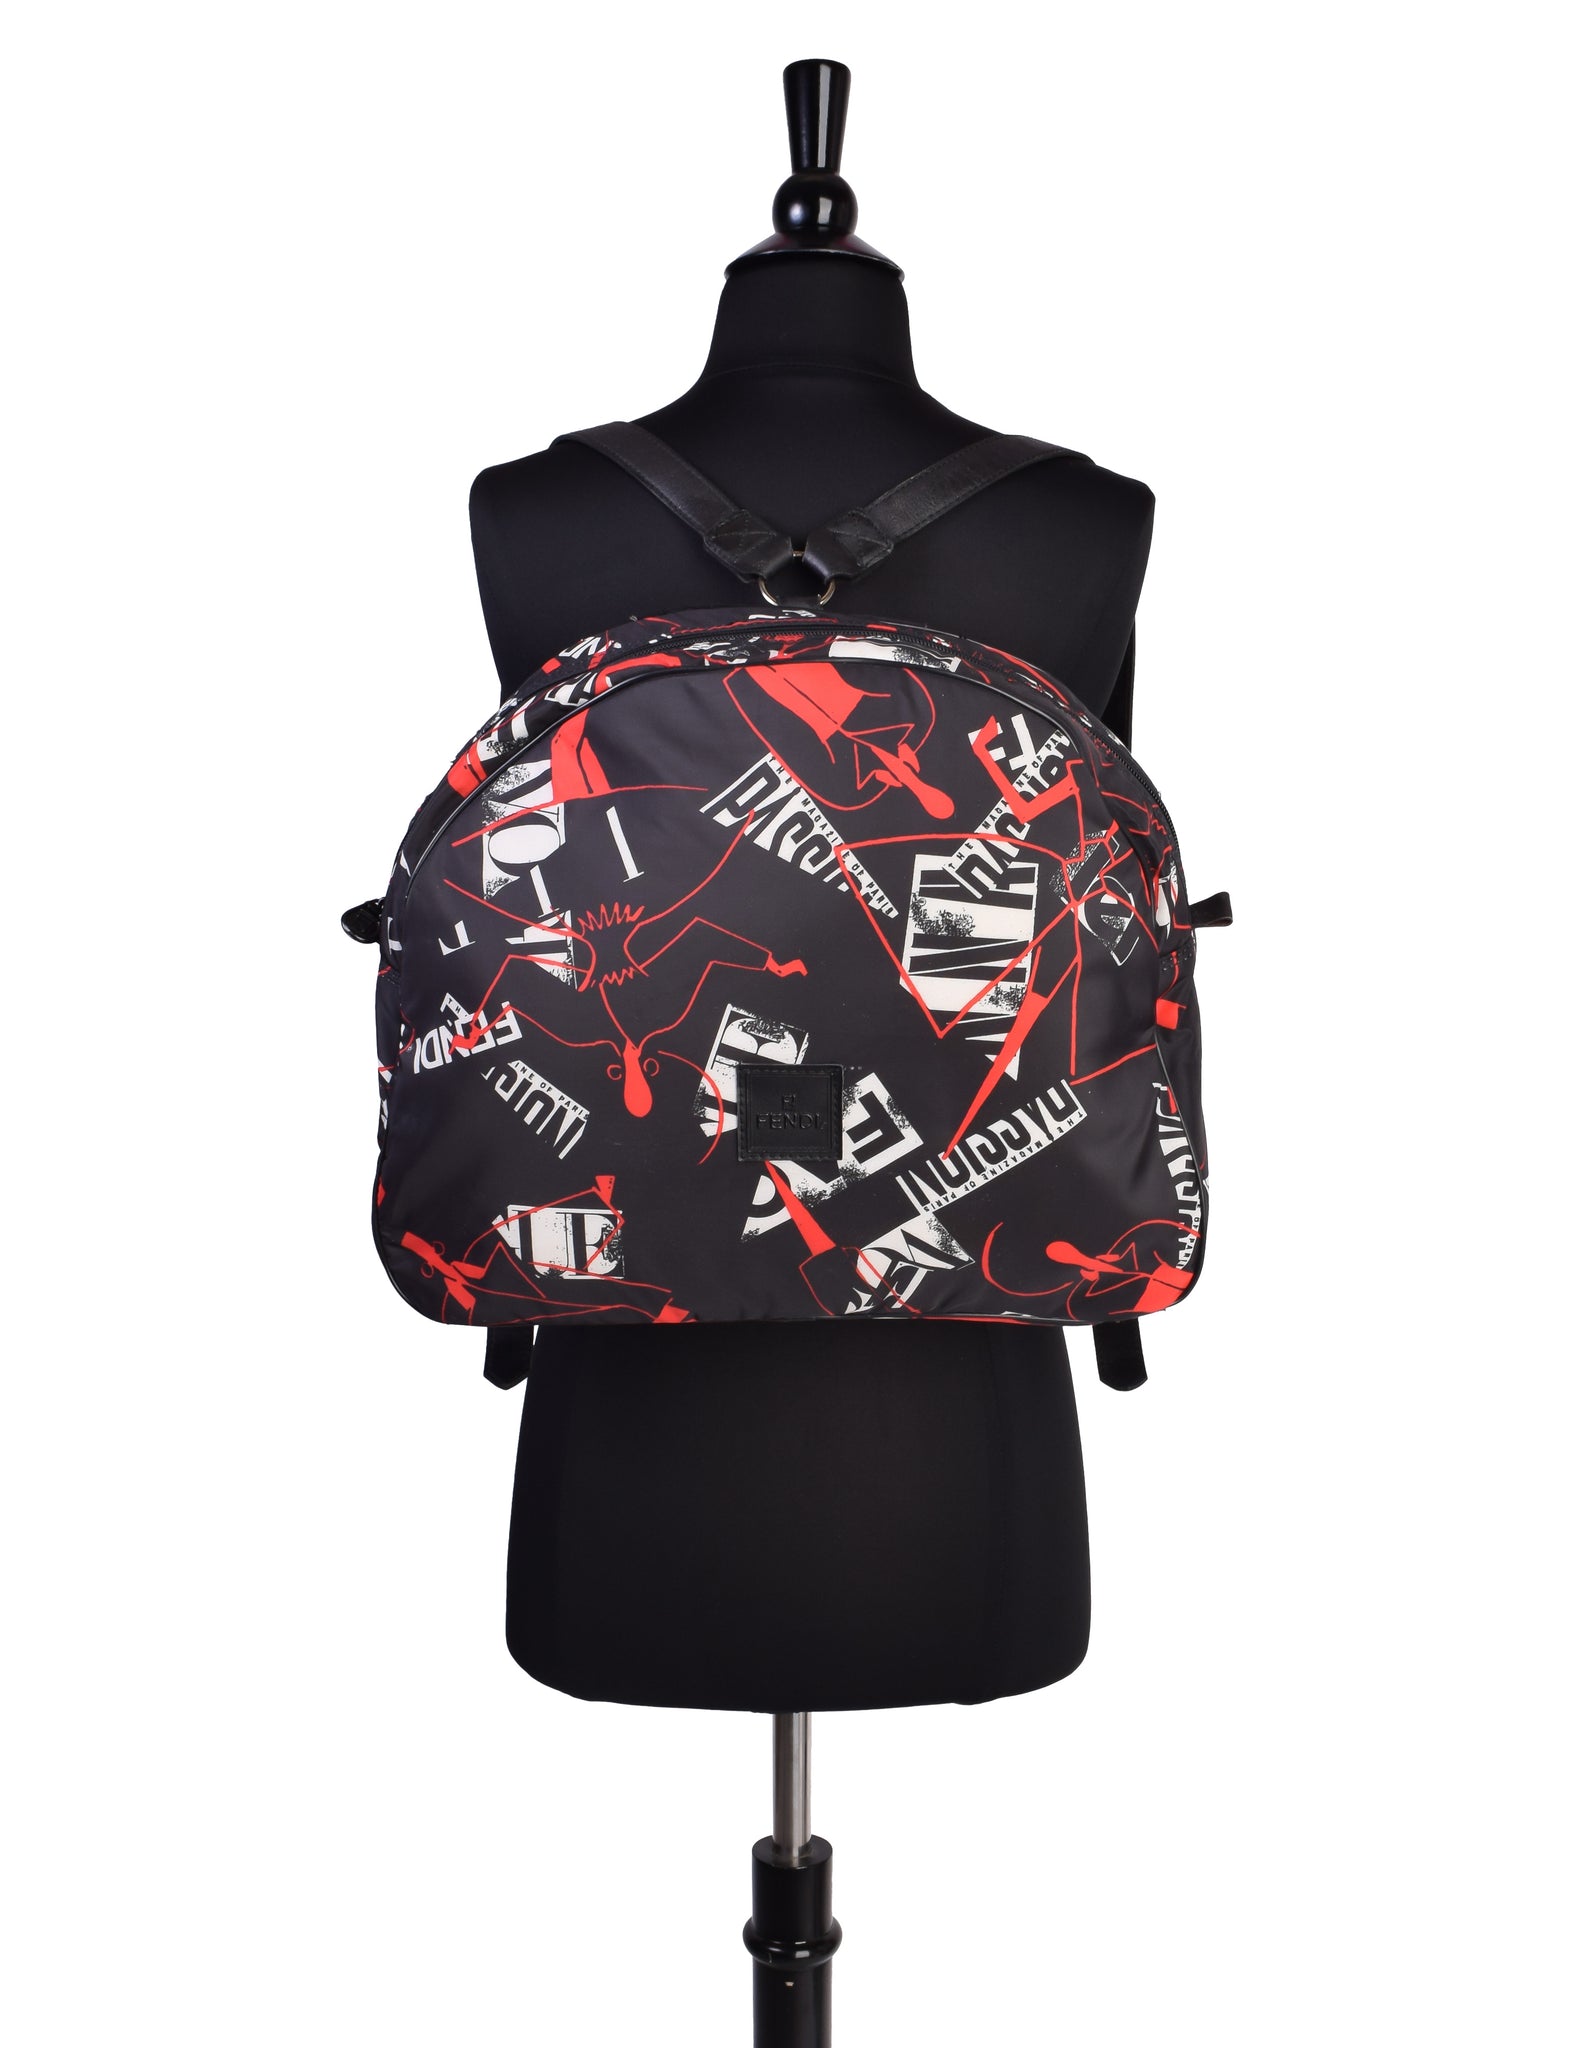 Fendi Vintage 1980s Black White Red Graphic Fashion Magazine Theme Nylon Backpack